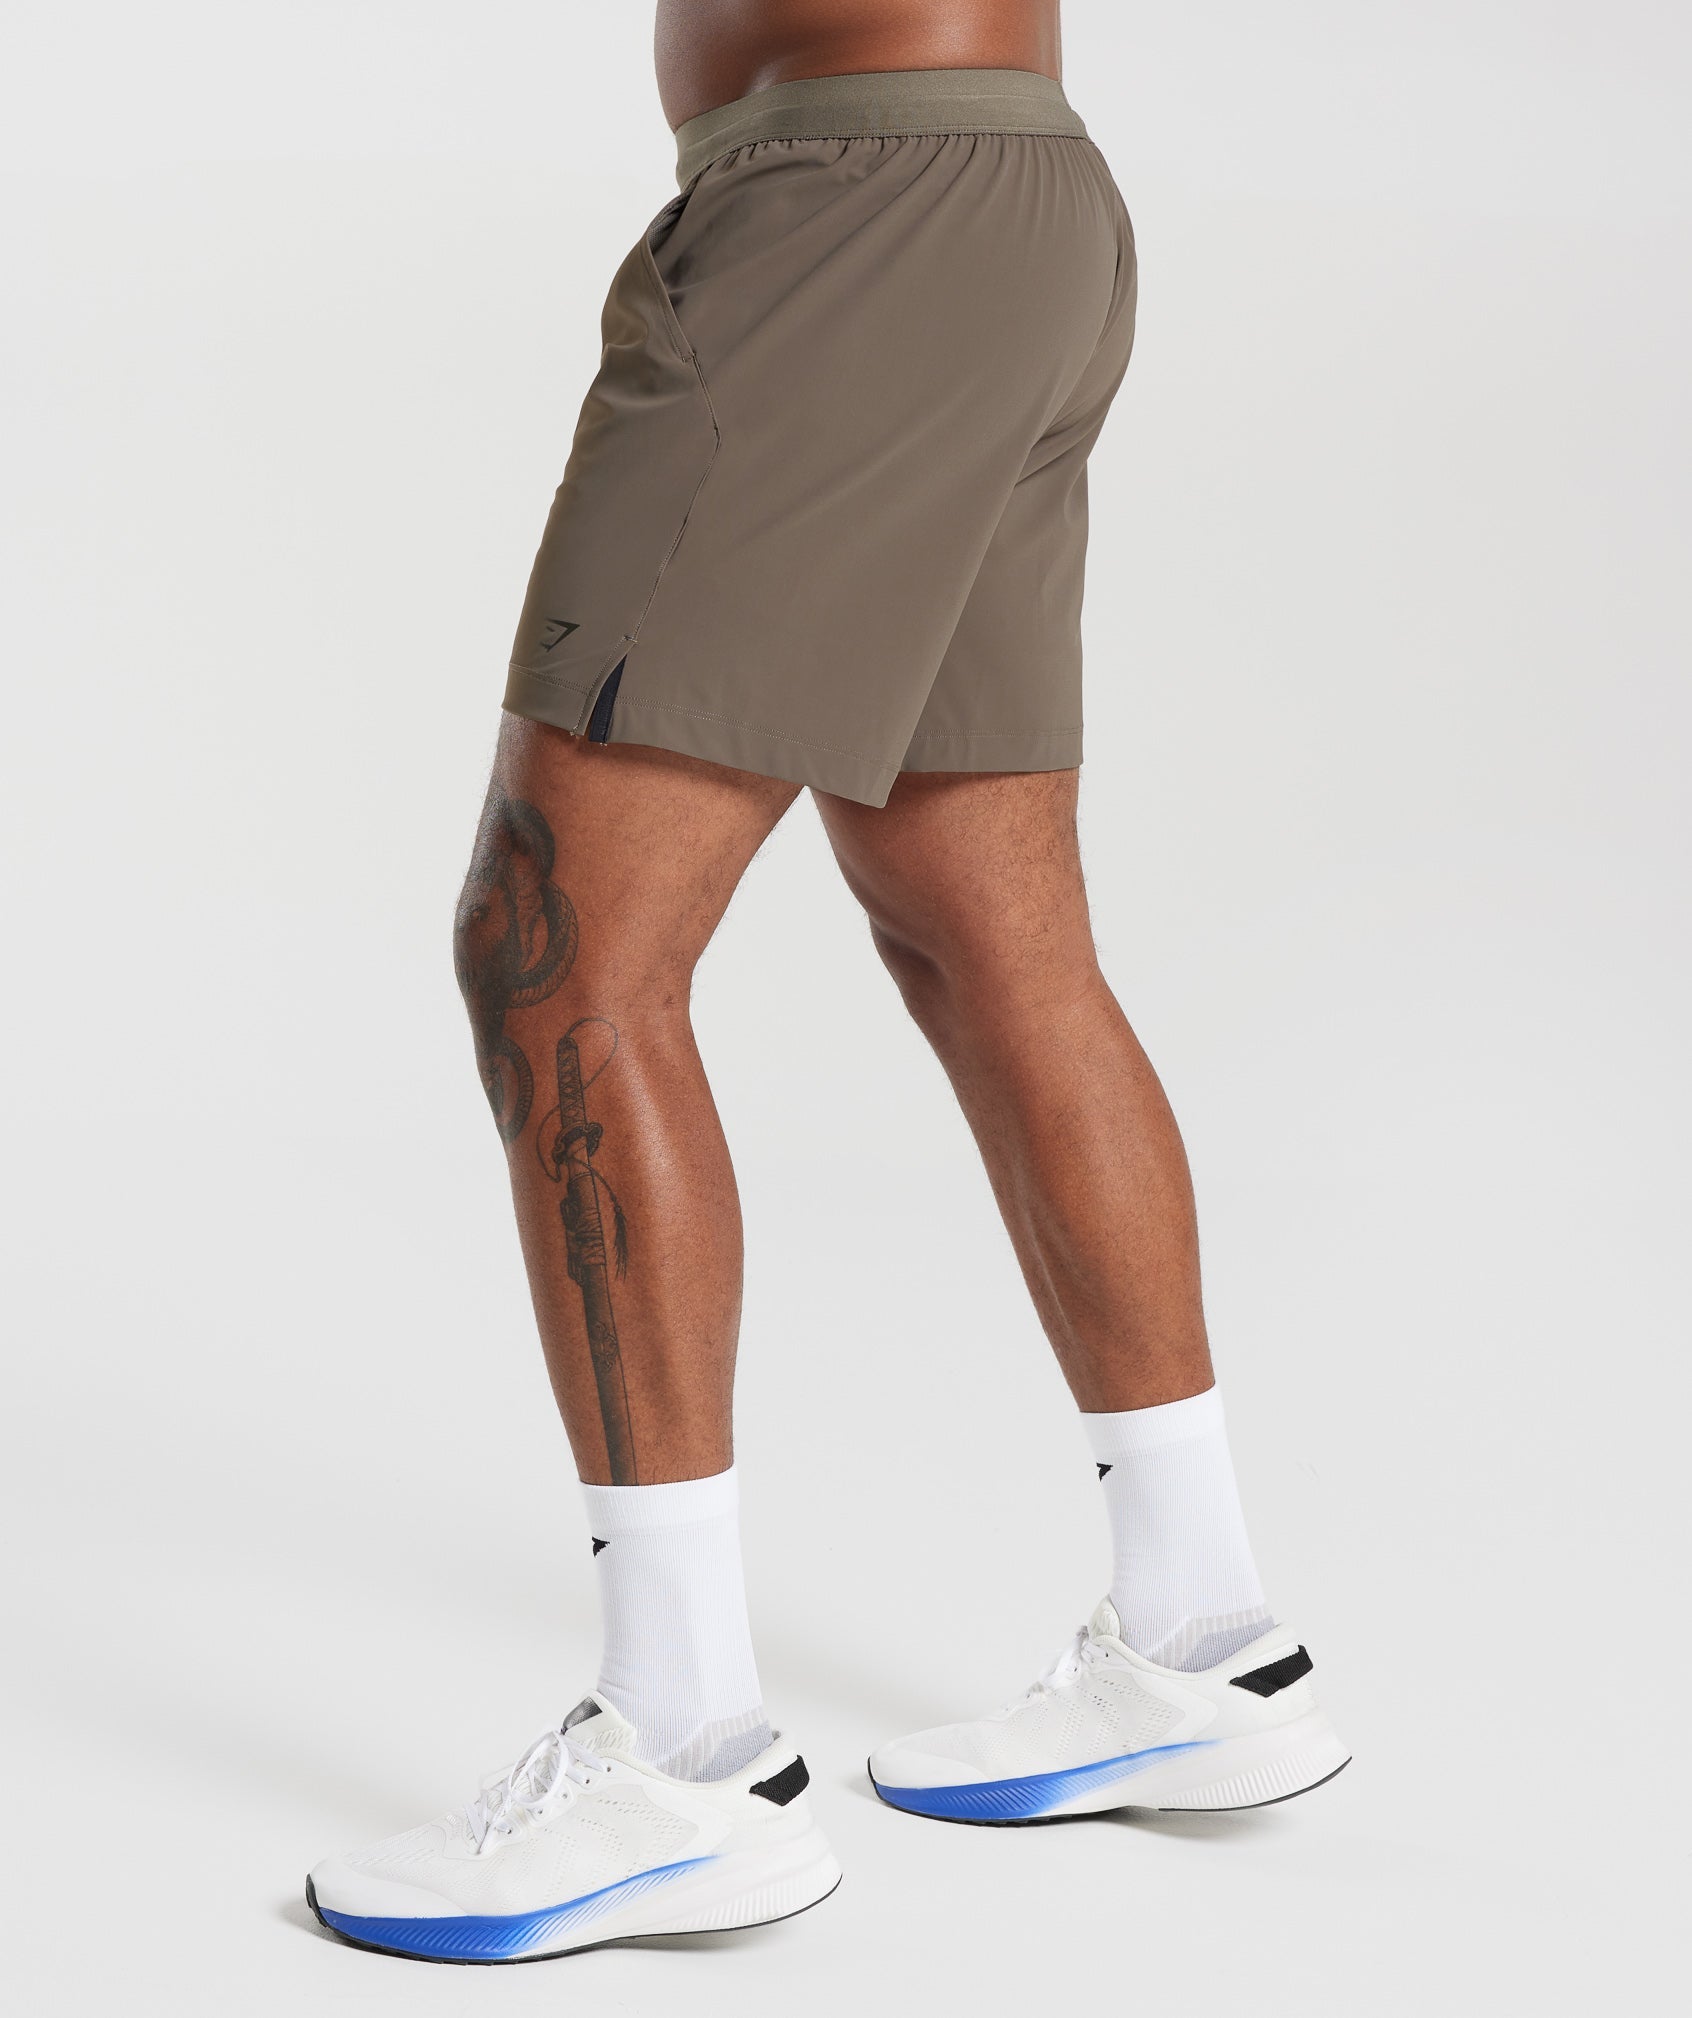 fvwitlyh Gymshark Shorts Mens Casual Shorts Workout Fashion Comfy Camo  Shorts Breathable Big and Tall Shorts 